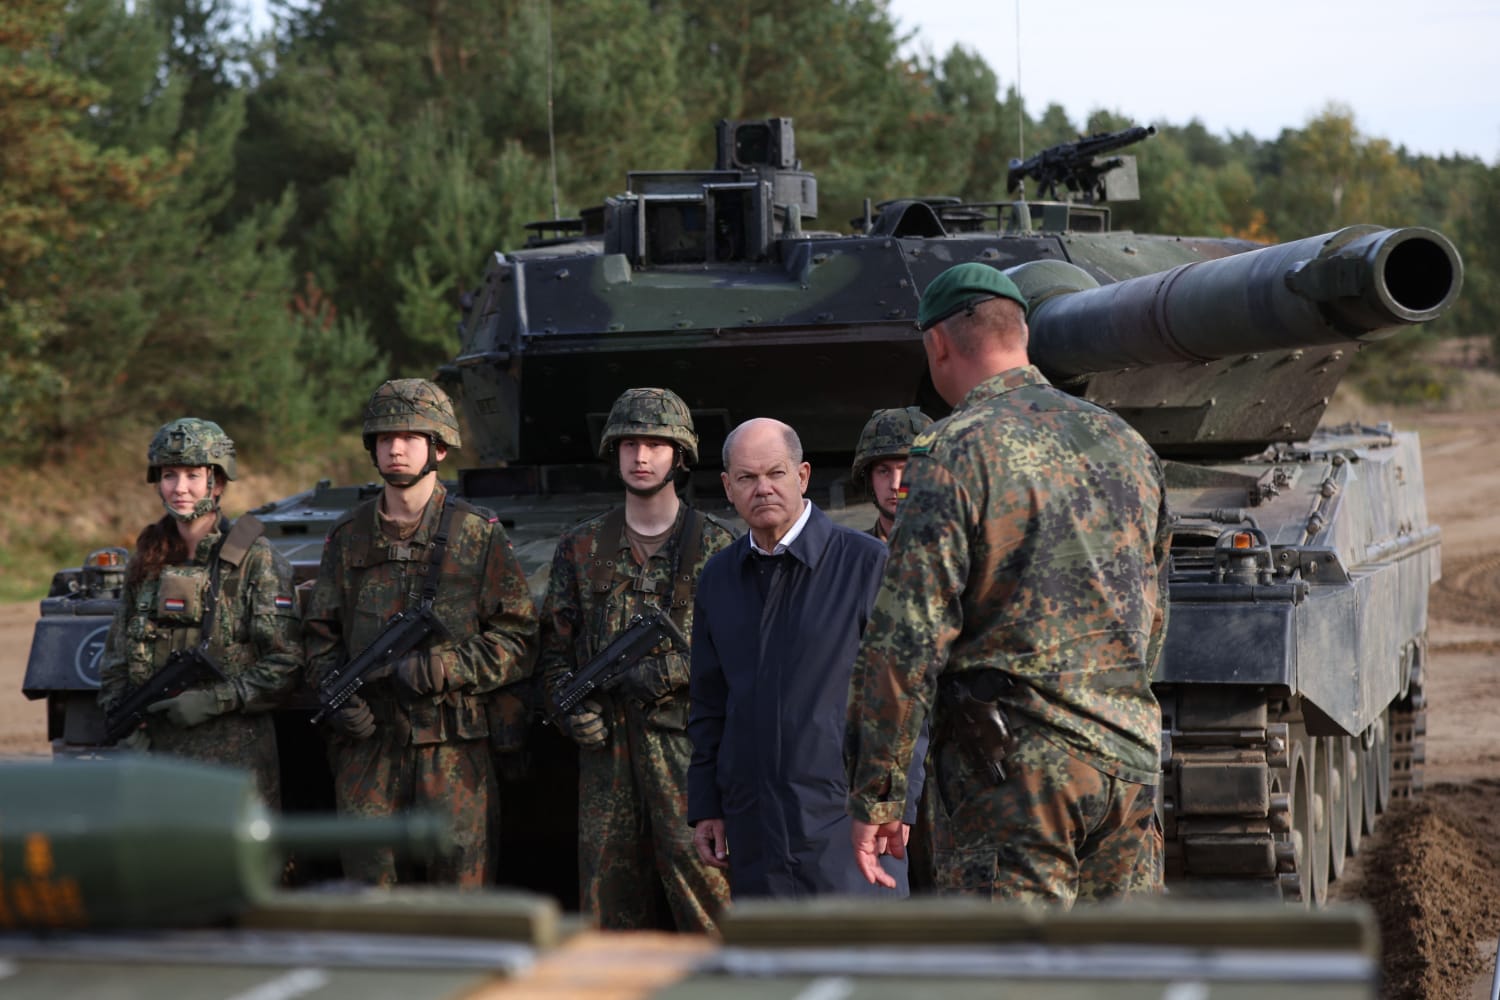 Poland pushes for tanks for Ukraine, will seek German OK